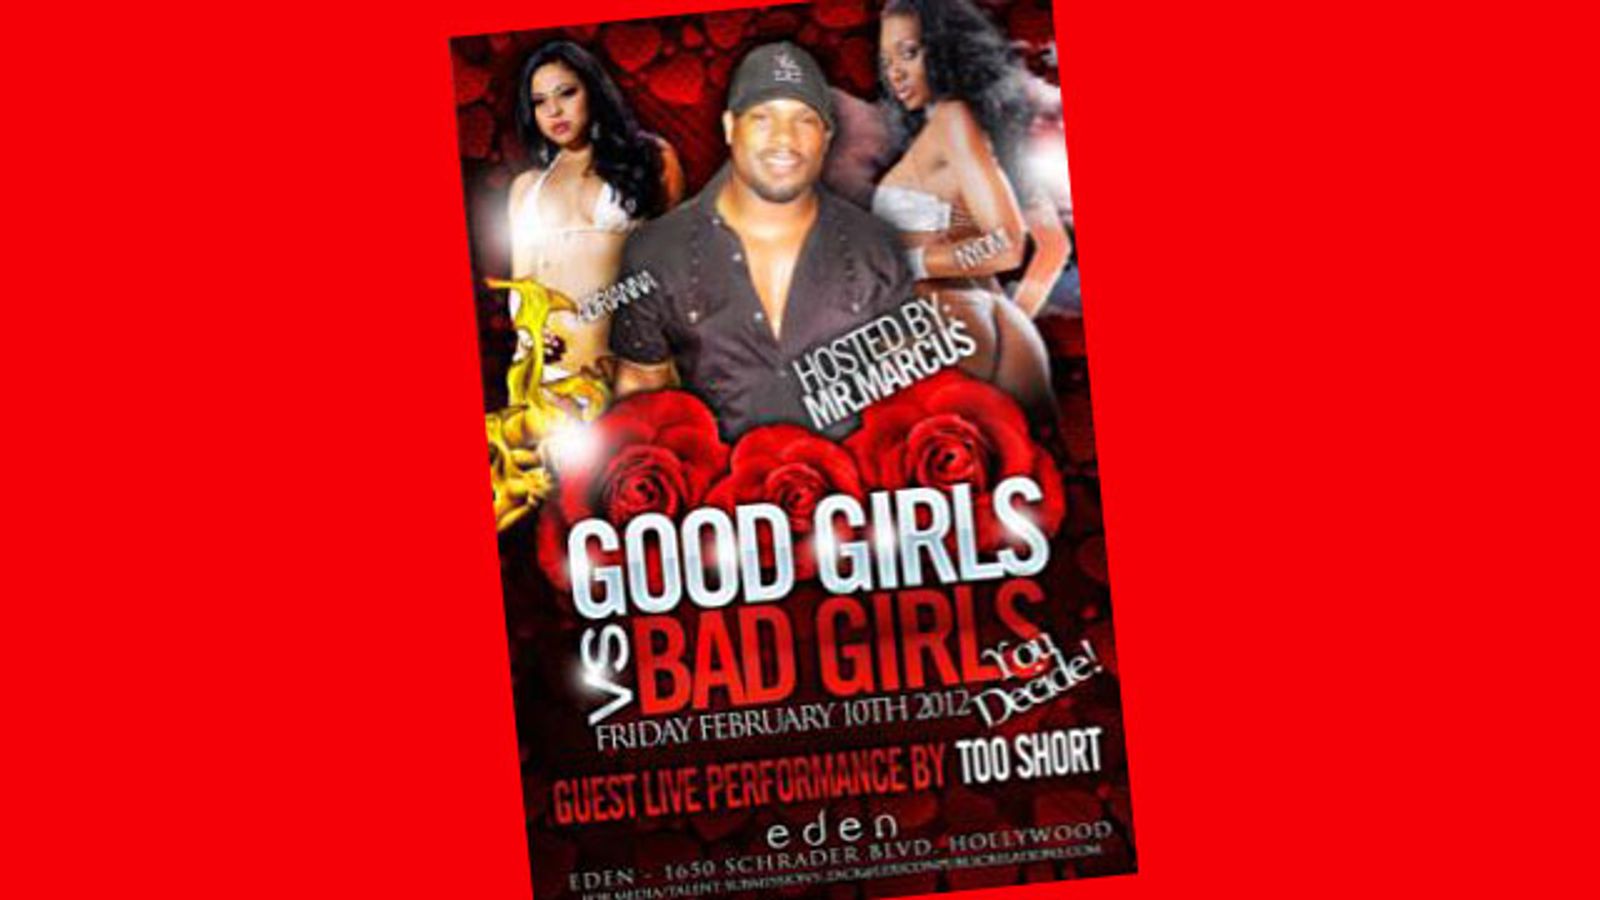 Mr. Marcus Hosts 'Good Girls vs. Bad Girls' Party Tonight